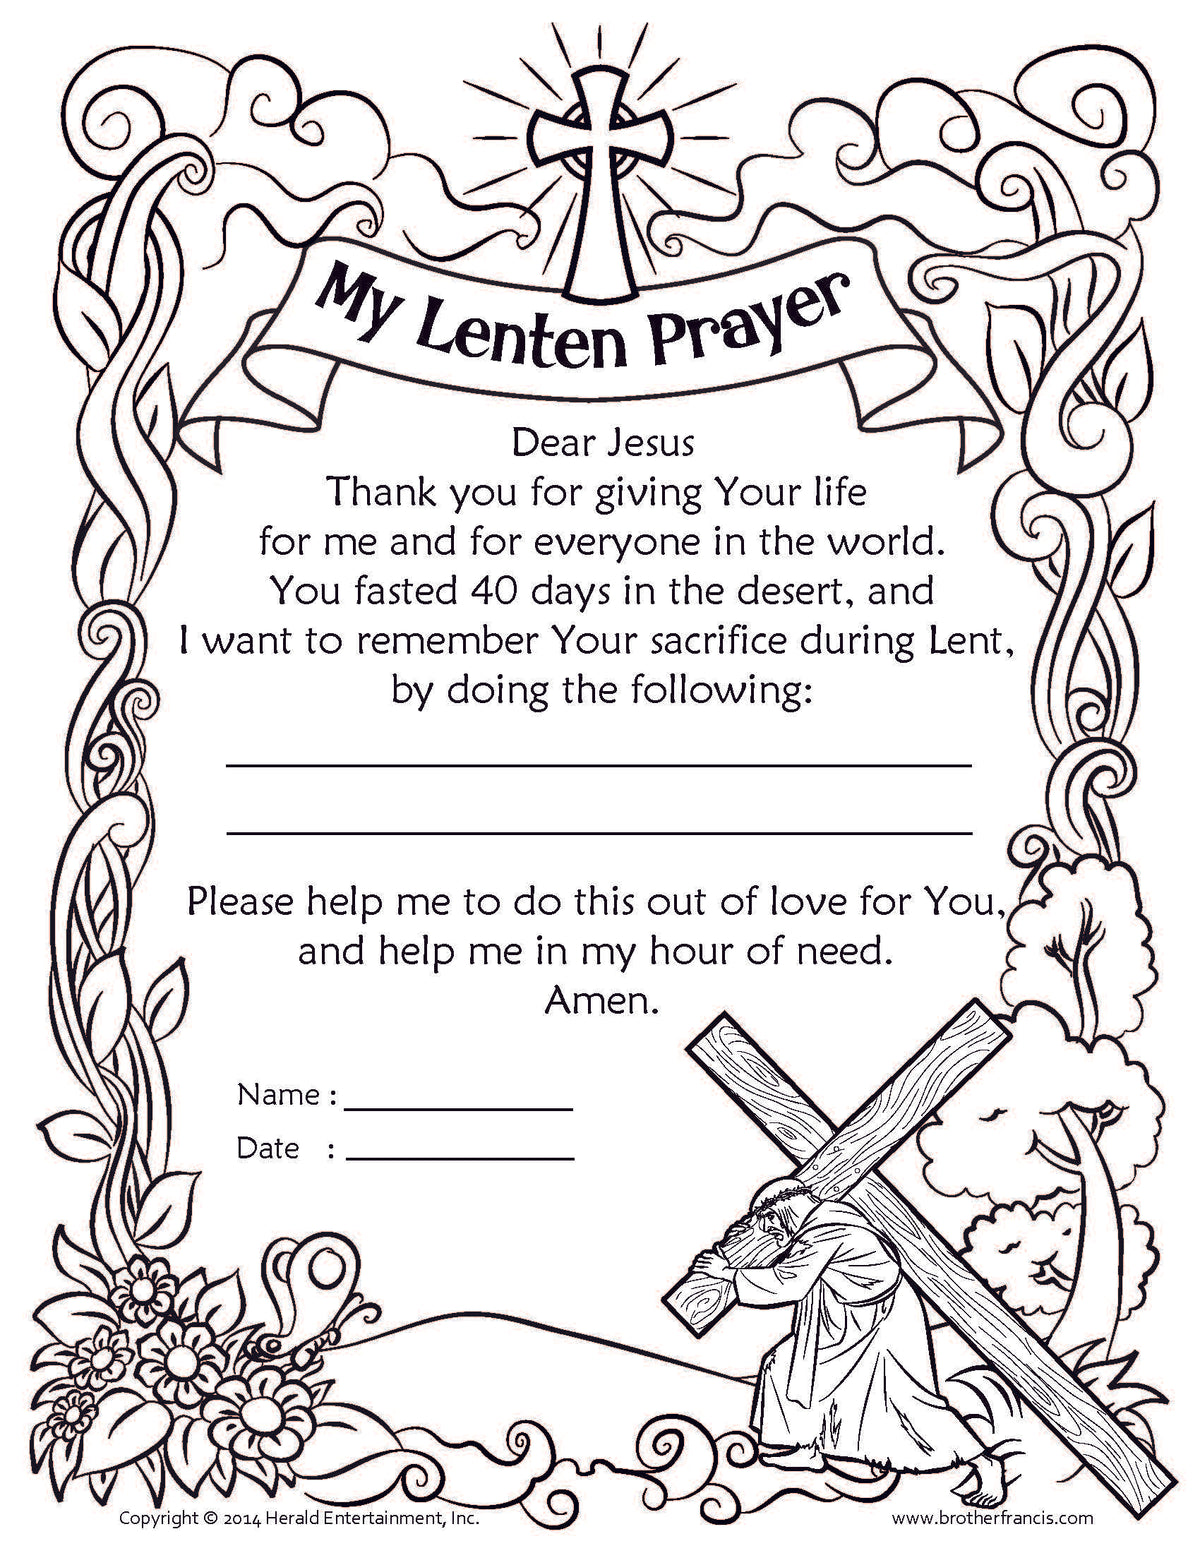 Download and Print - My Lenten Prayer